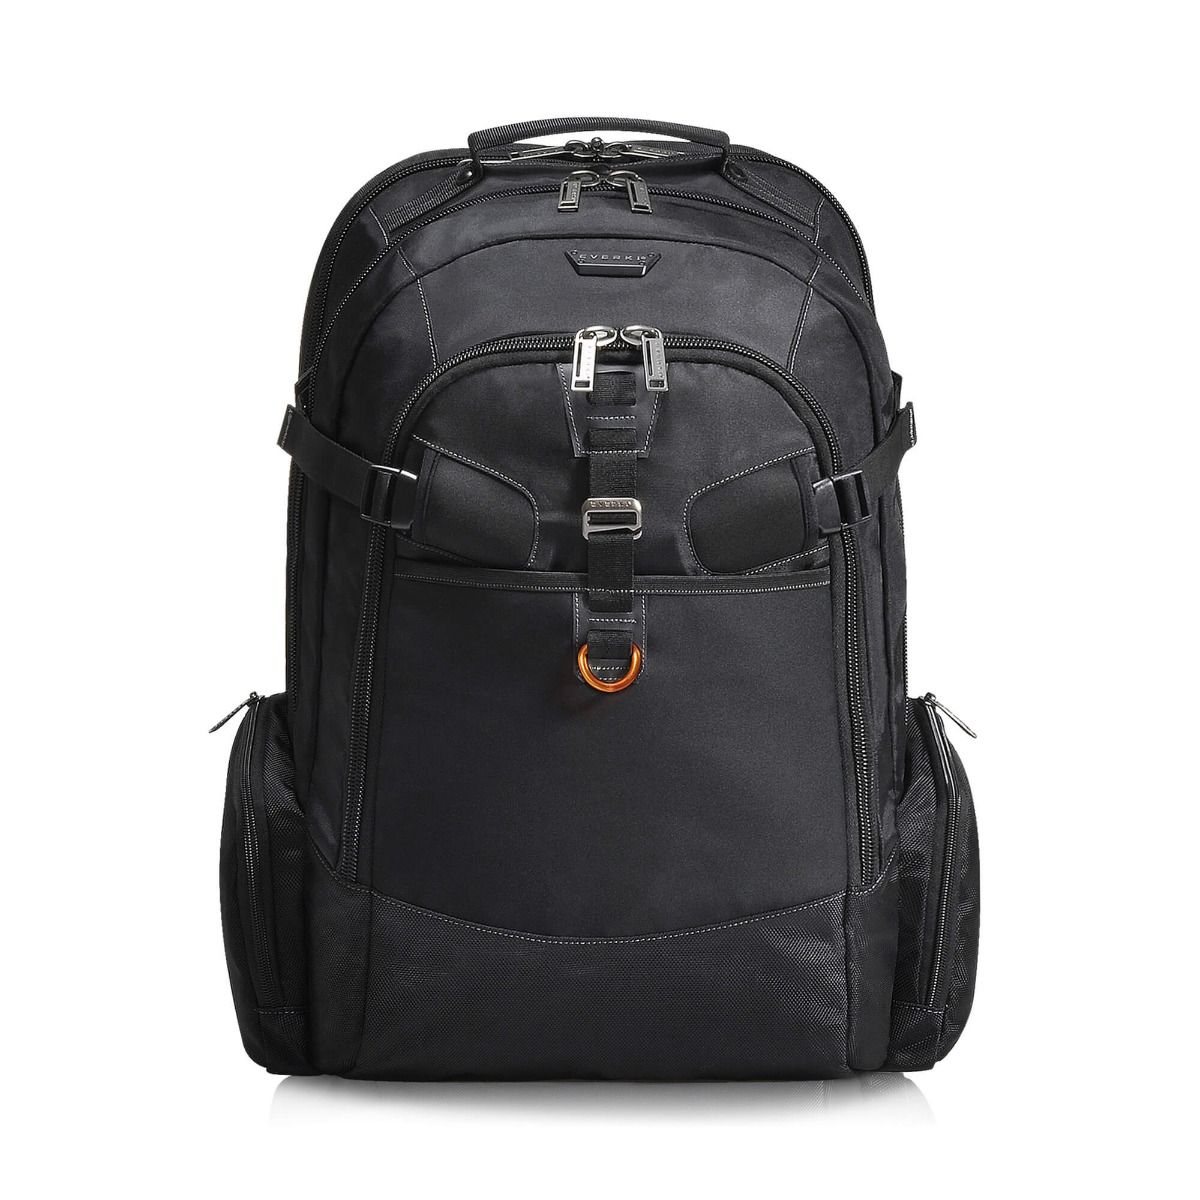 Business 120 18.4-Inch Easy-travel Laptop Backpack EVERKI